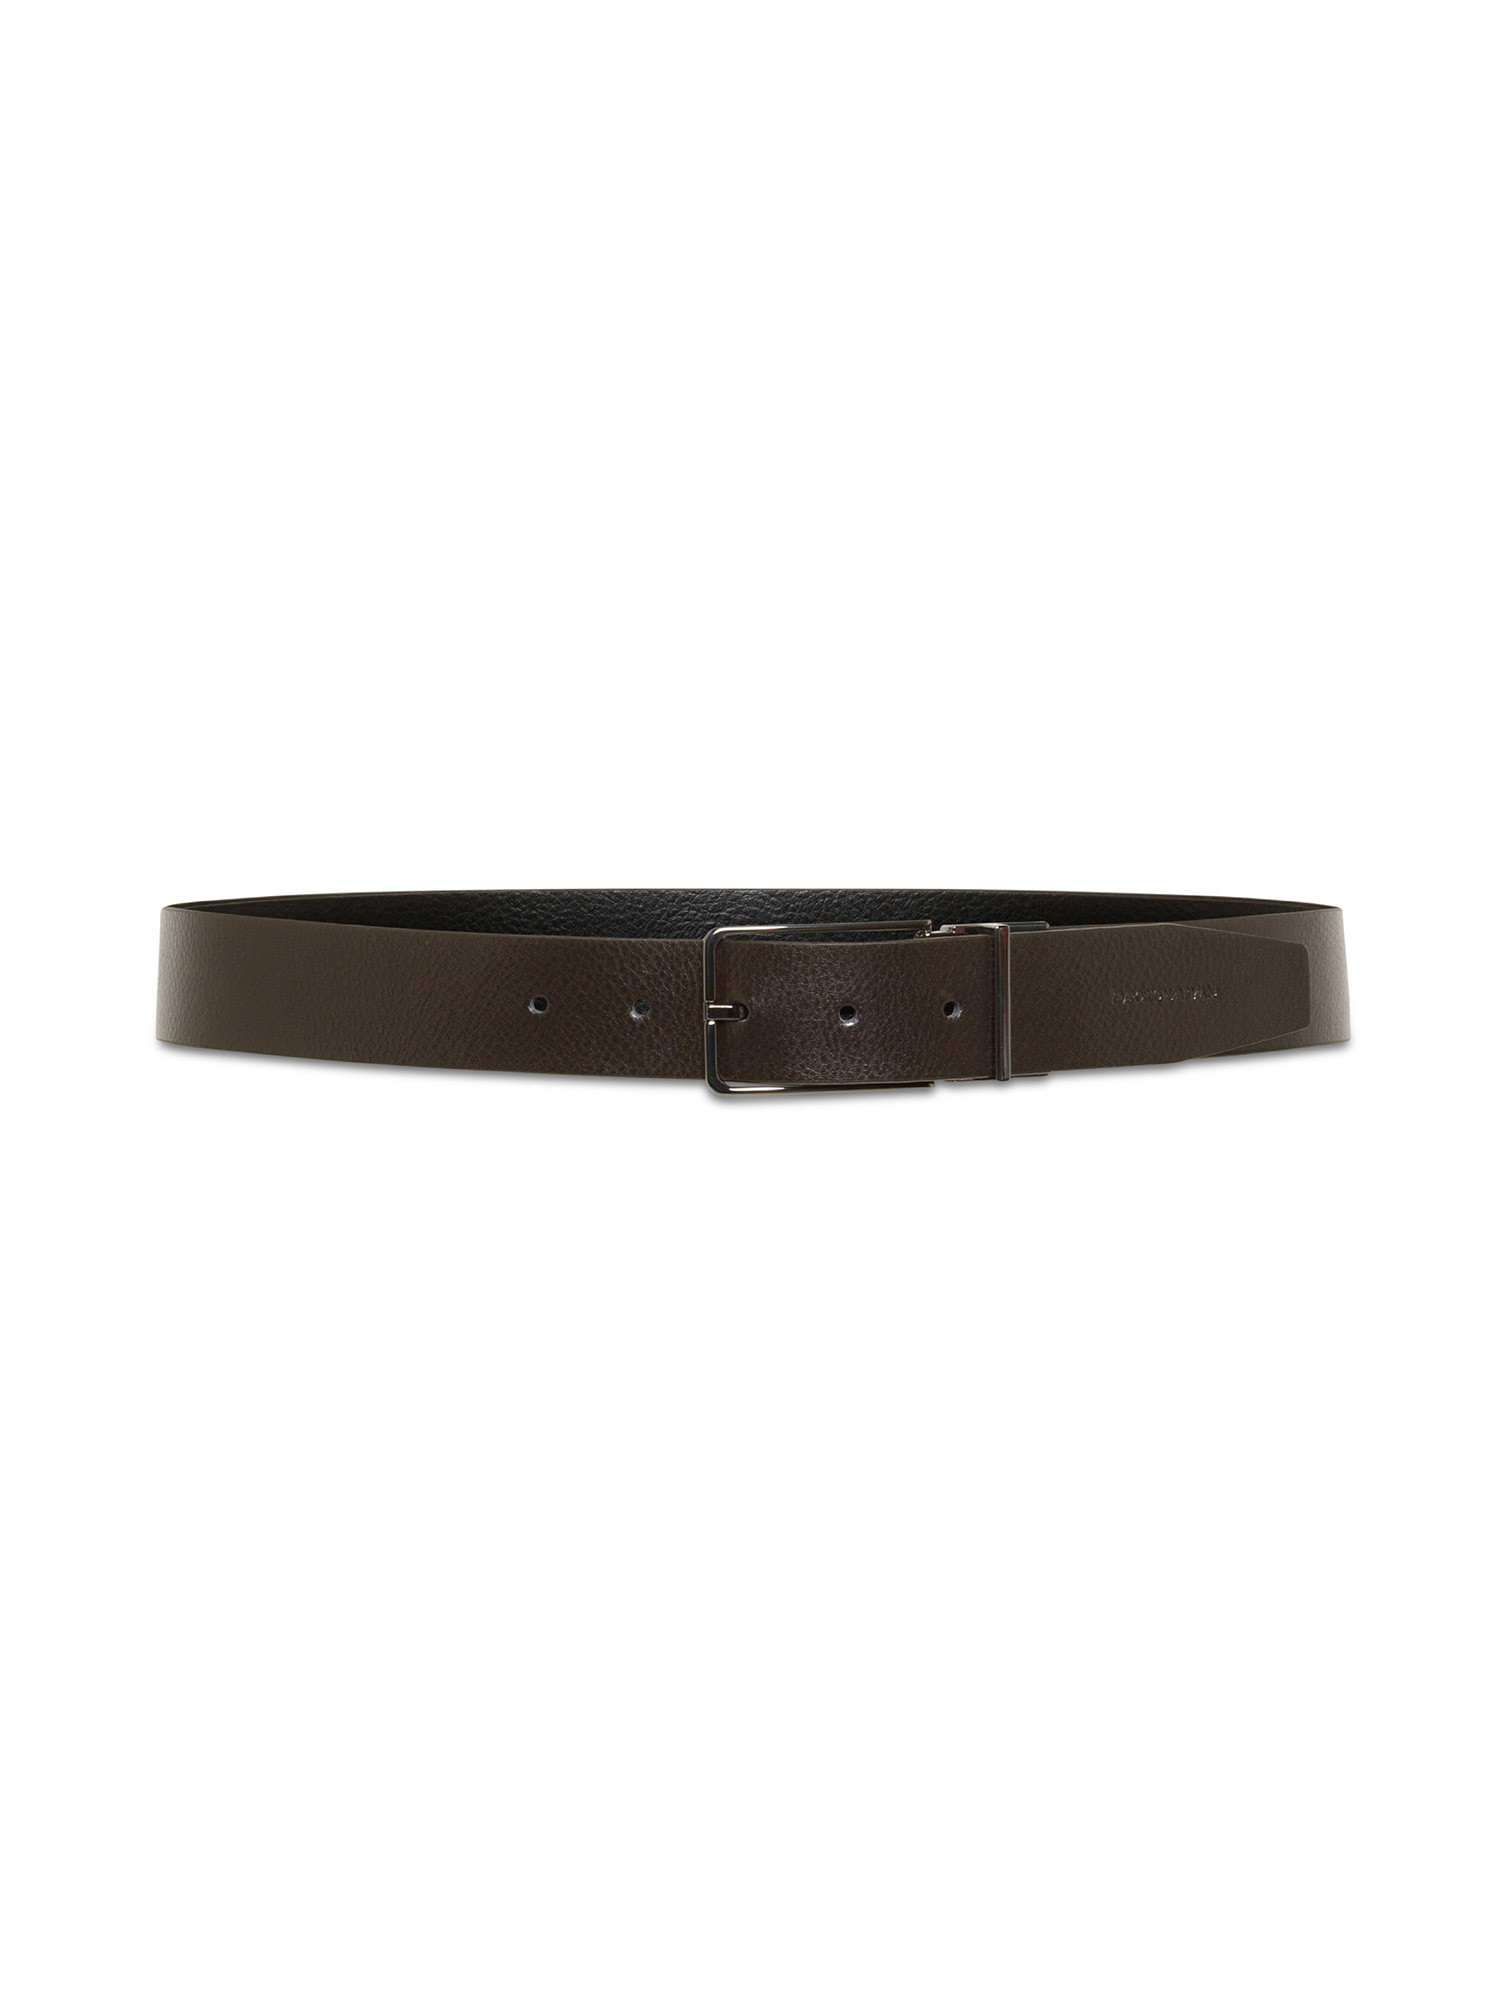 Emporio Armani - Reversible reindeer-effect leather belt, Brown, large image number 1